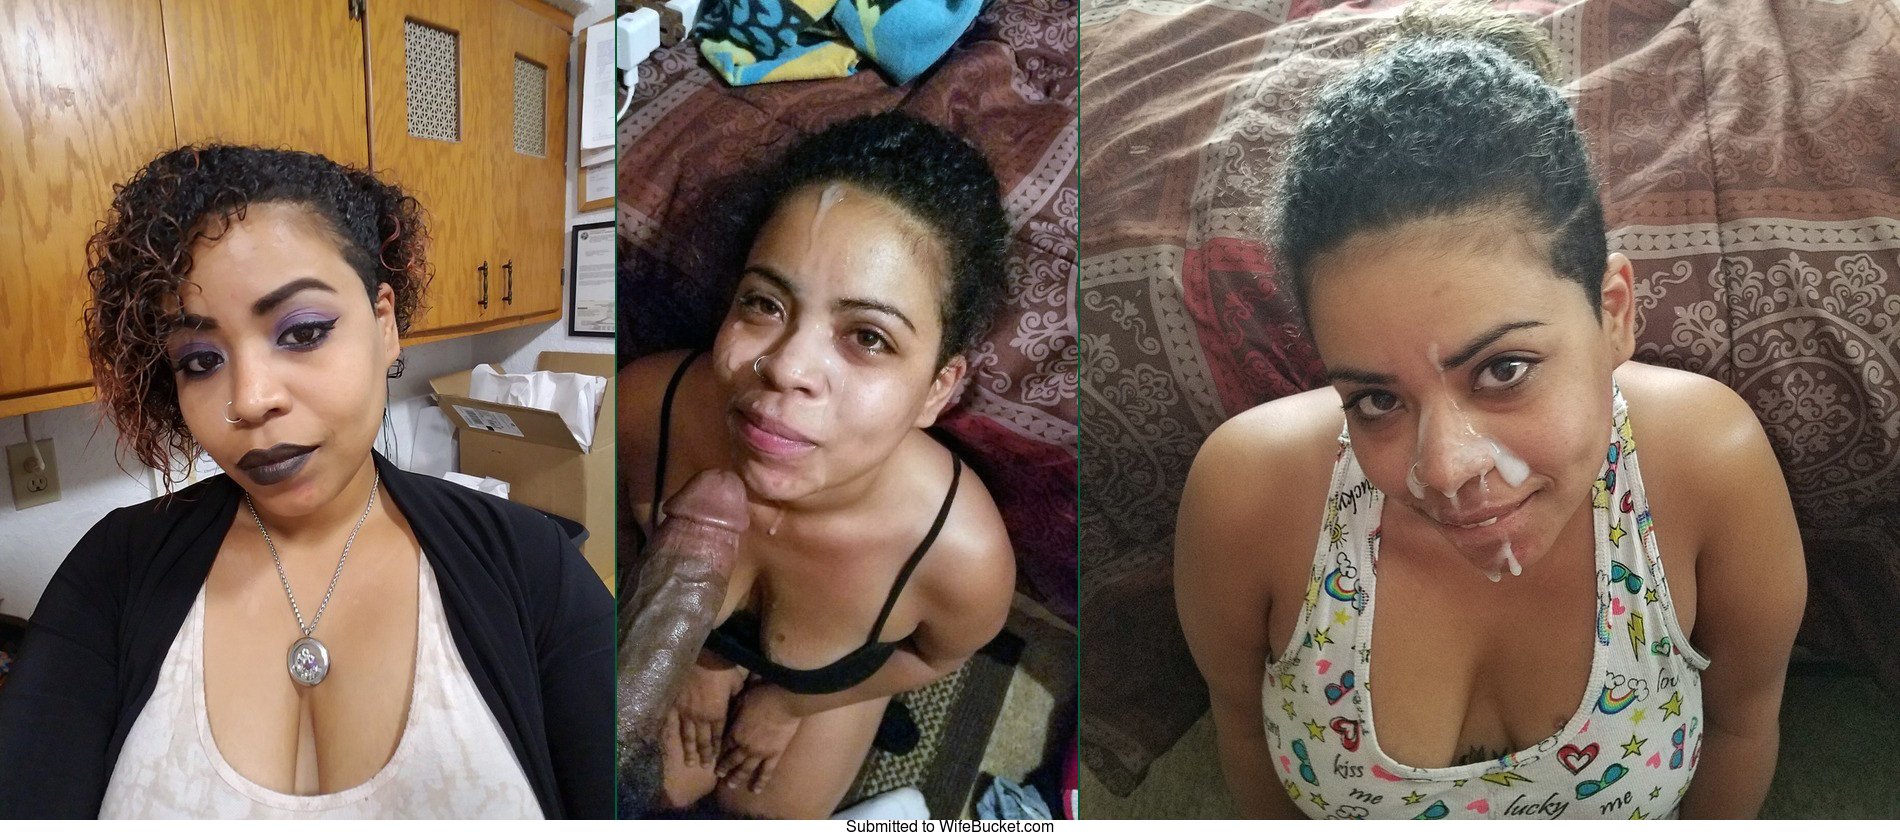 British Ebony Facial - Before-after sex pics â€“ WifeBucket | Offical MILF Blog